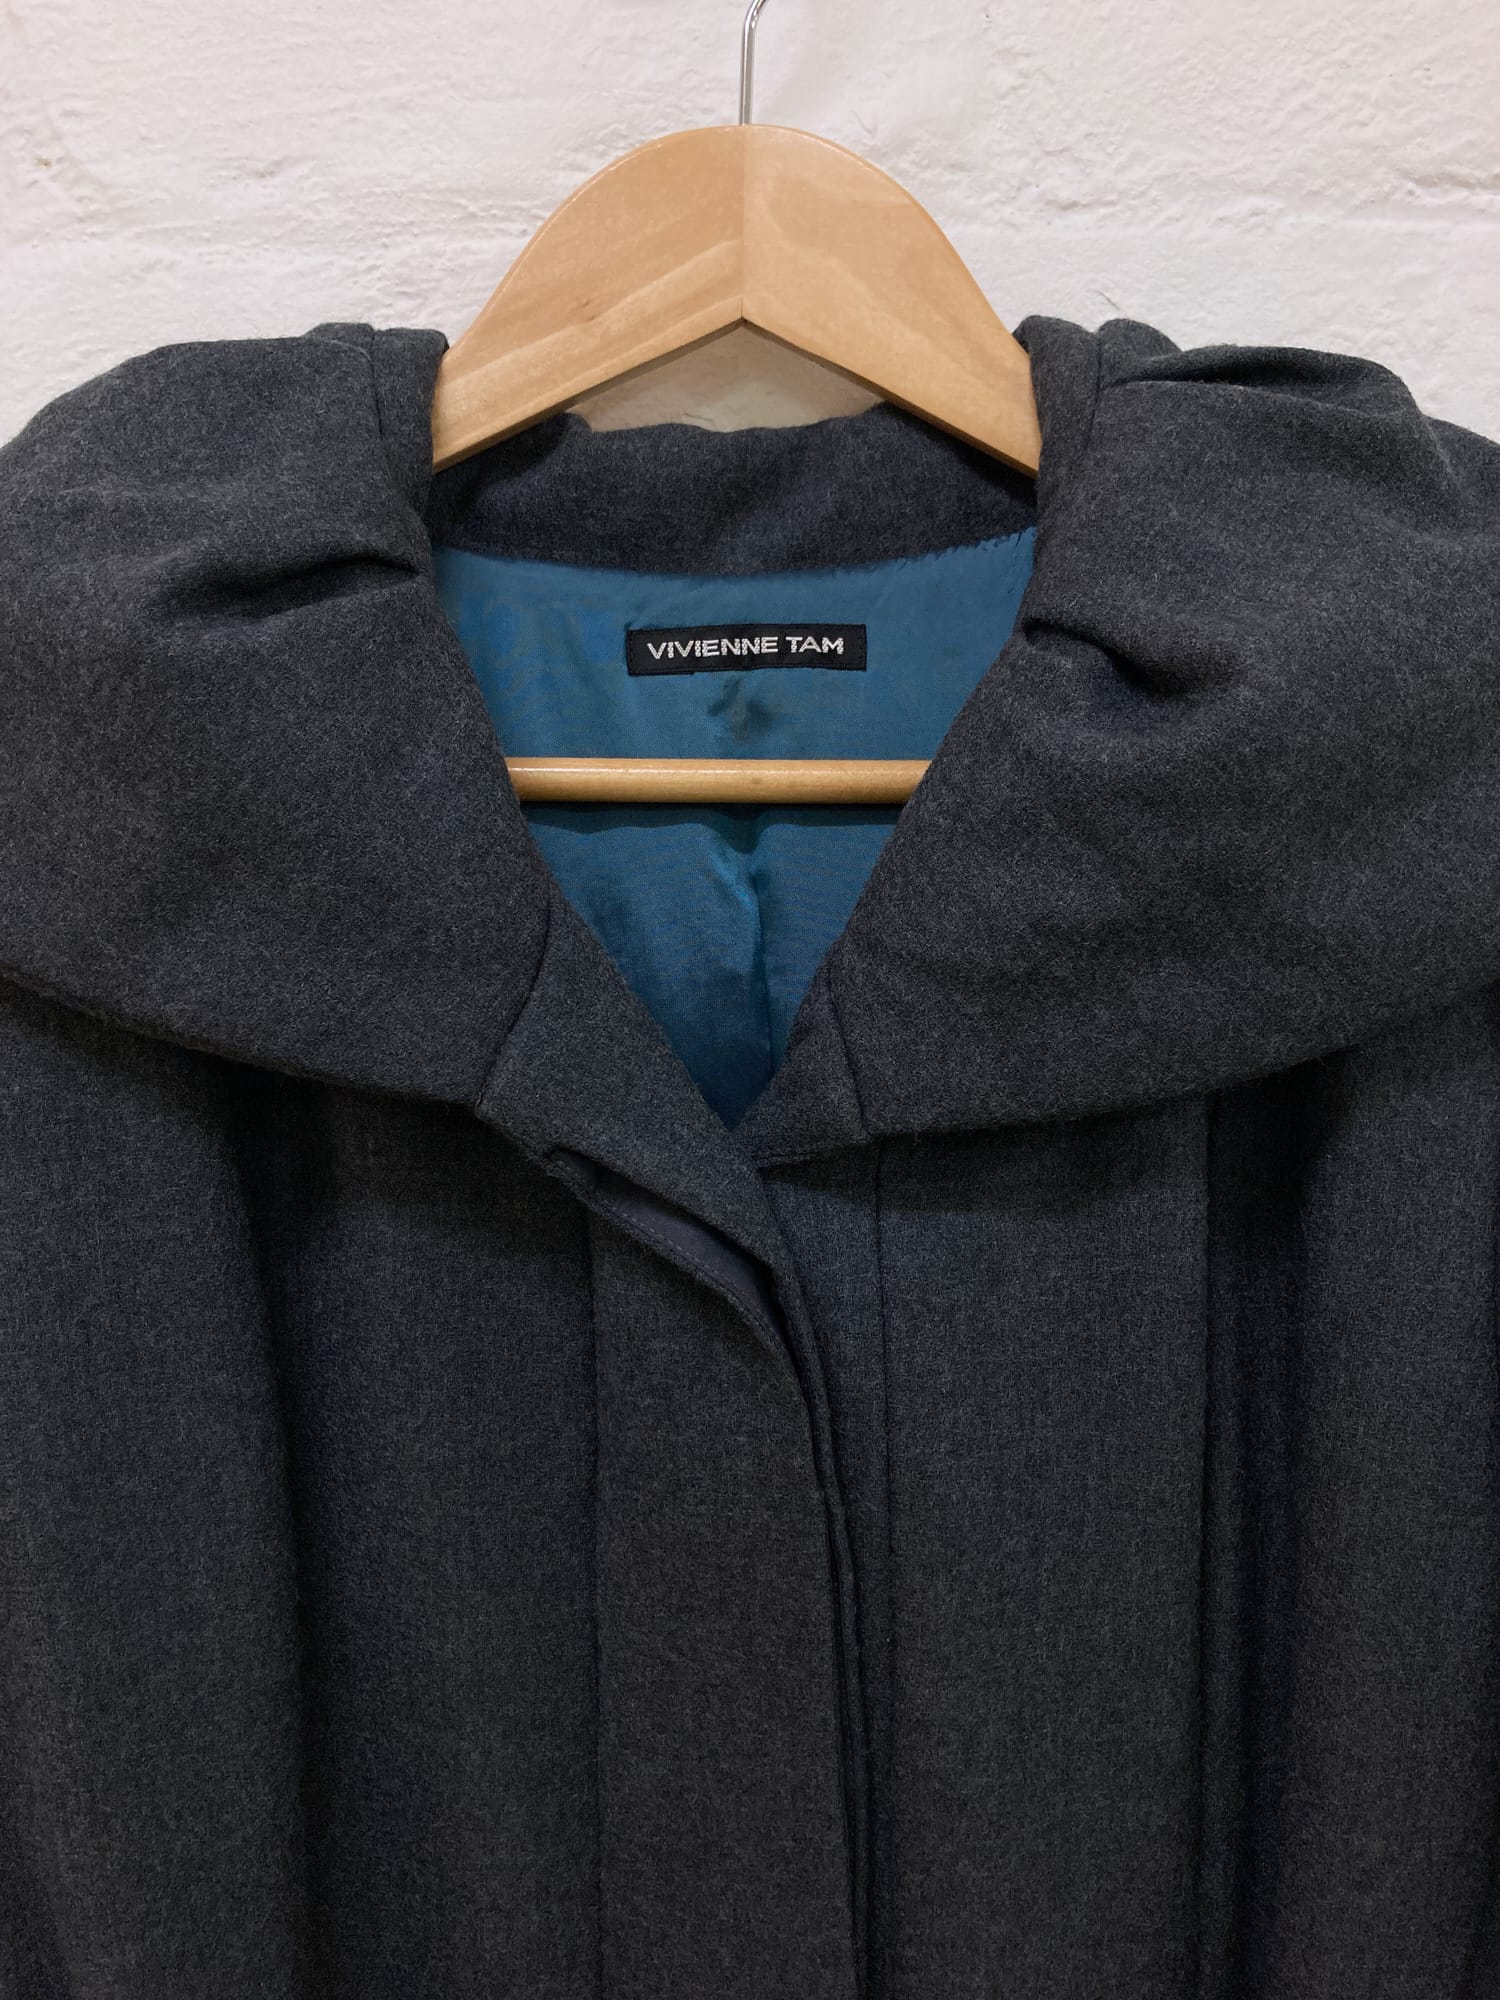 Vivienne Tam padded grey puffy collar coat - sample